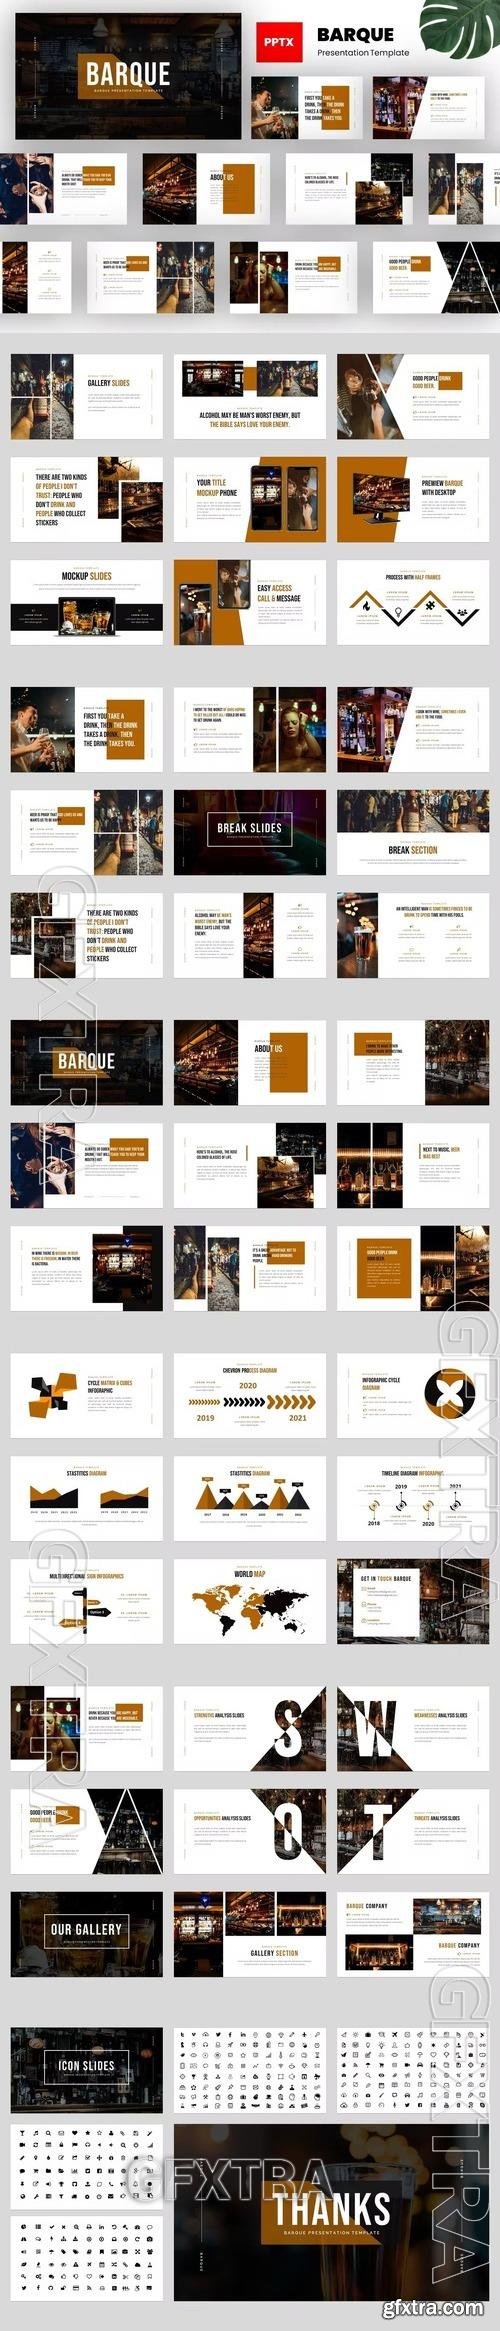 Barque - Bar & Cafe PowerPoint Template KMYGUB9